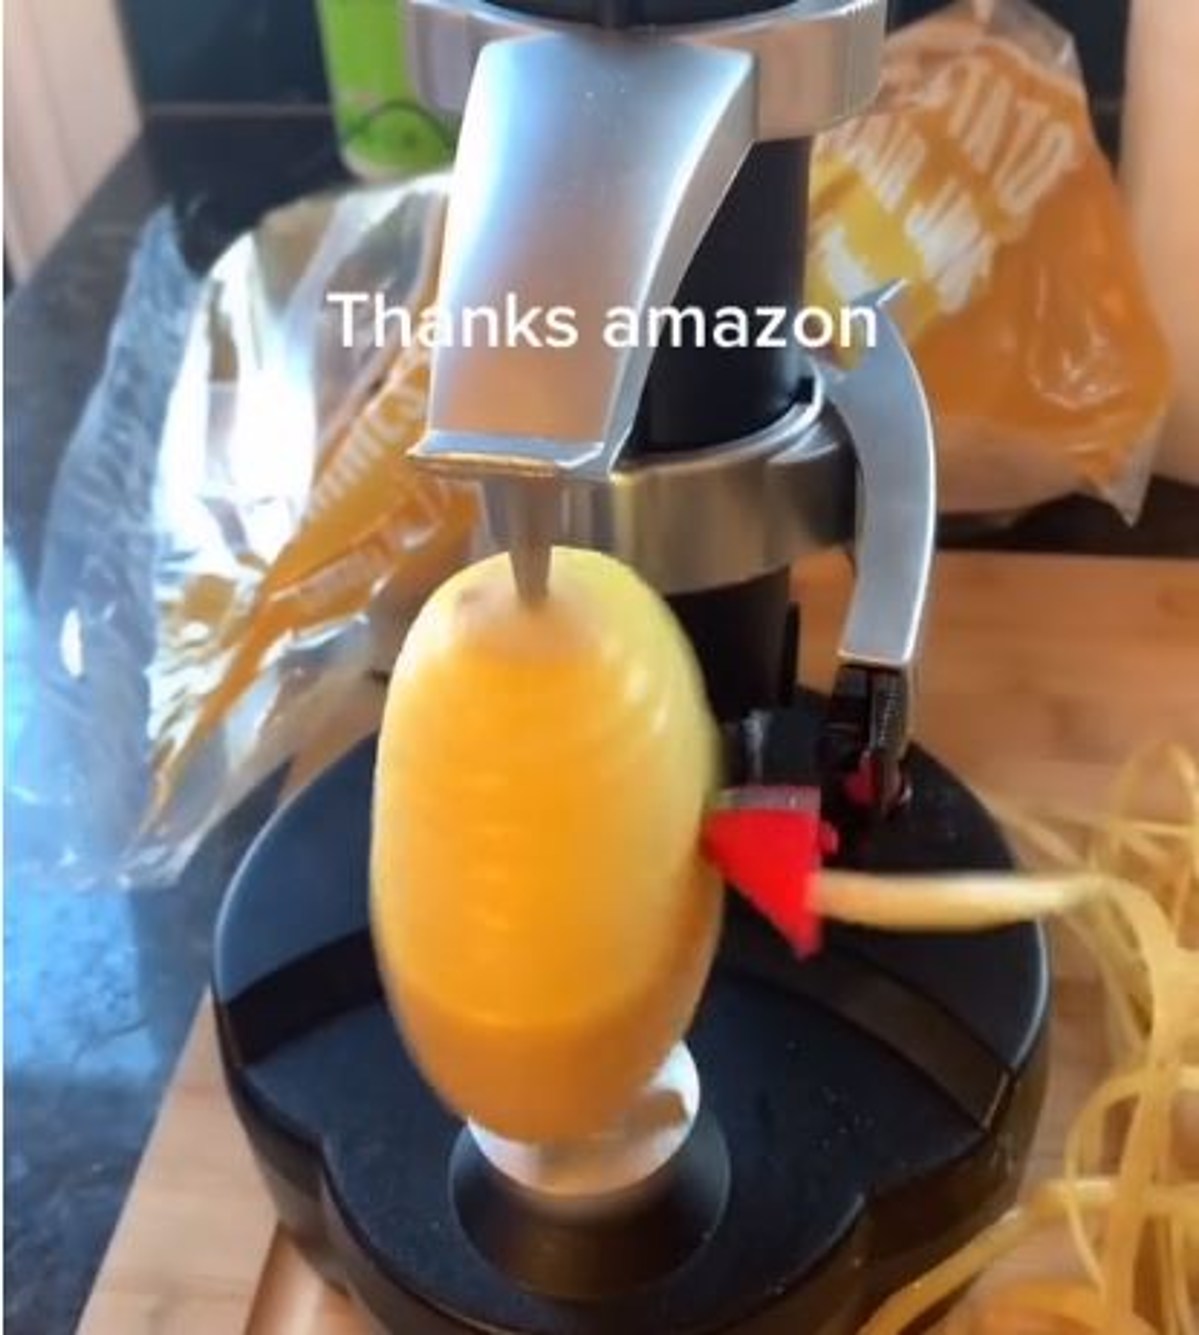 Kitchen Gadgets: Mesmerizing $20 device from viral TikTok